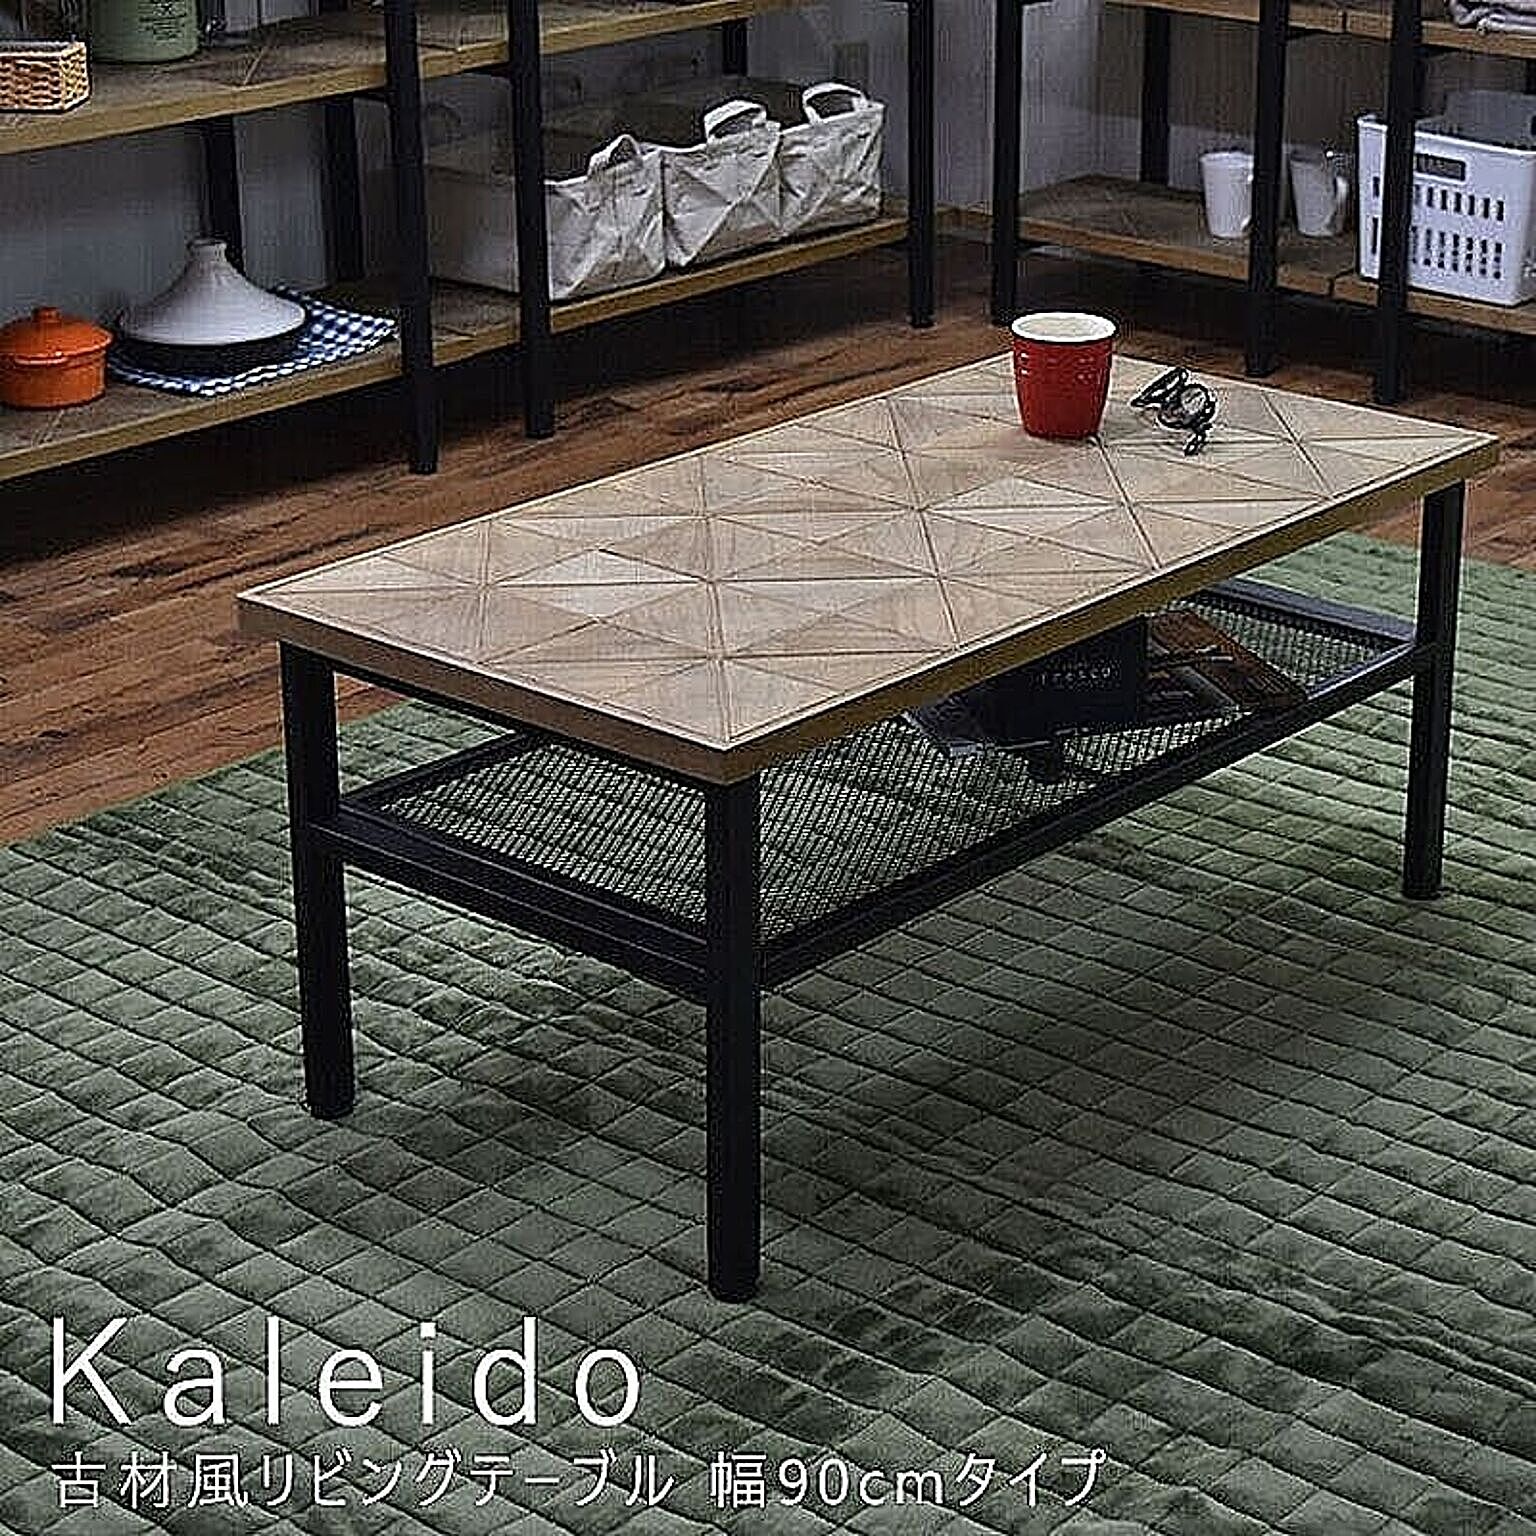 B.Bファニシング Kaleido リビングテーブル 幅90cm ベージュ m00630